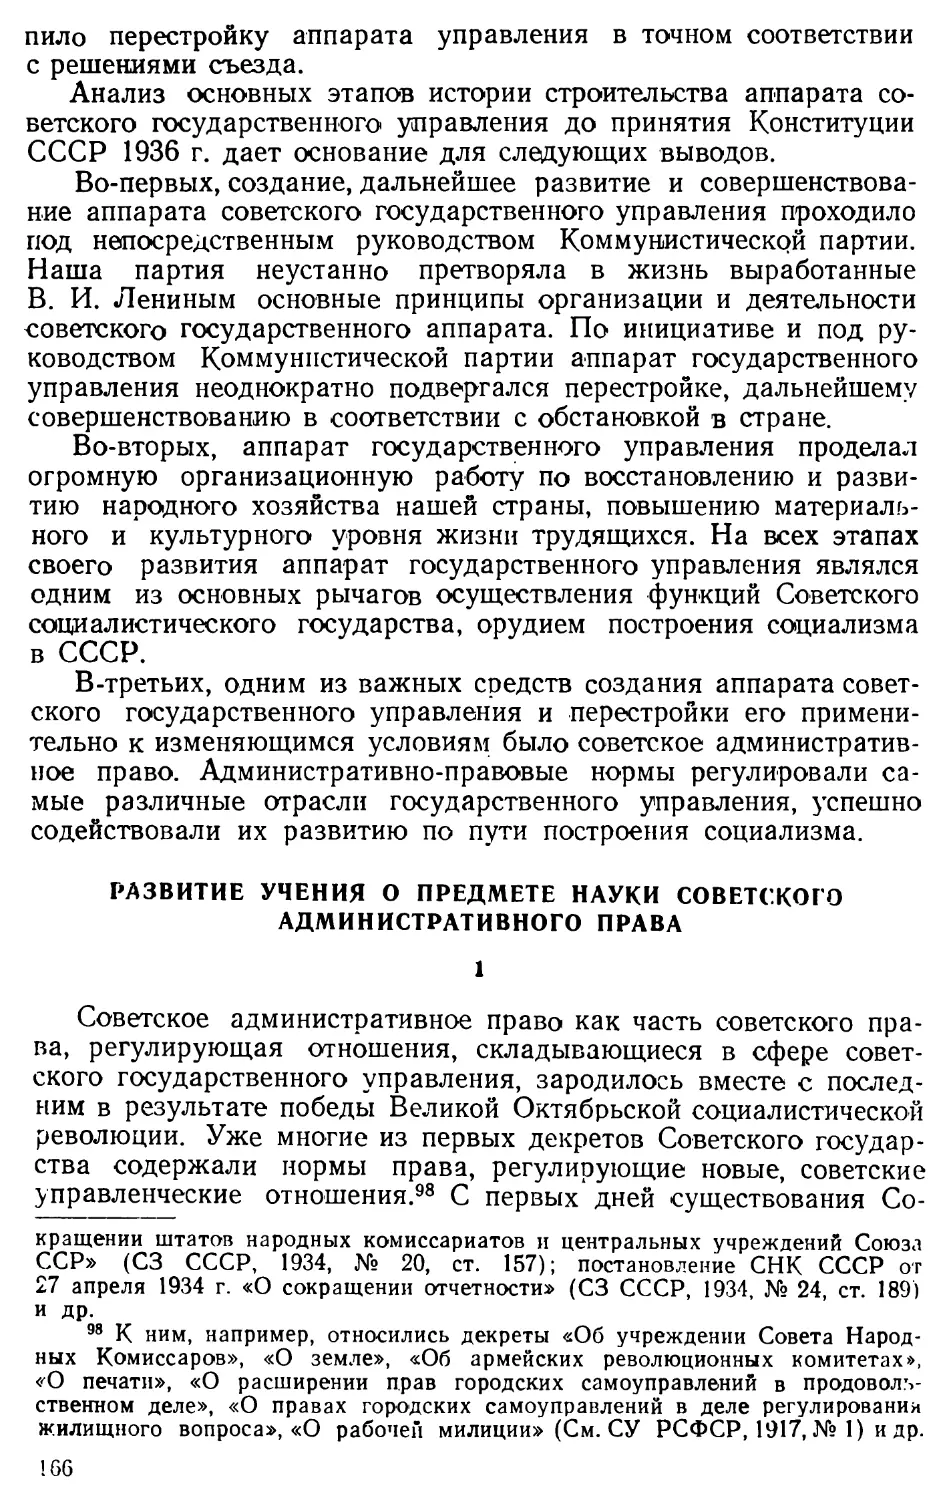 Развитие учения о предмете науки советского административного права.